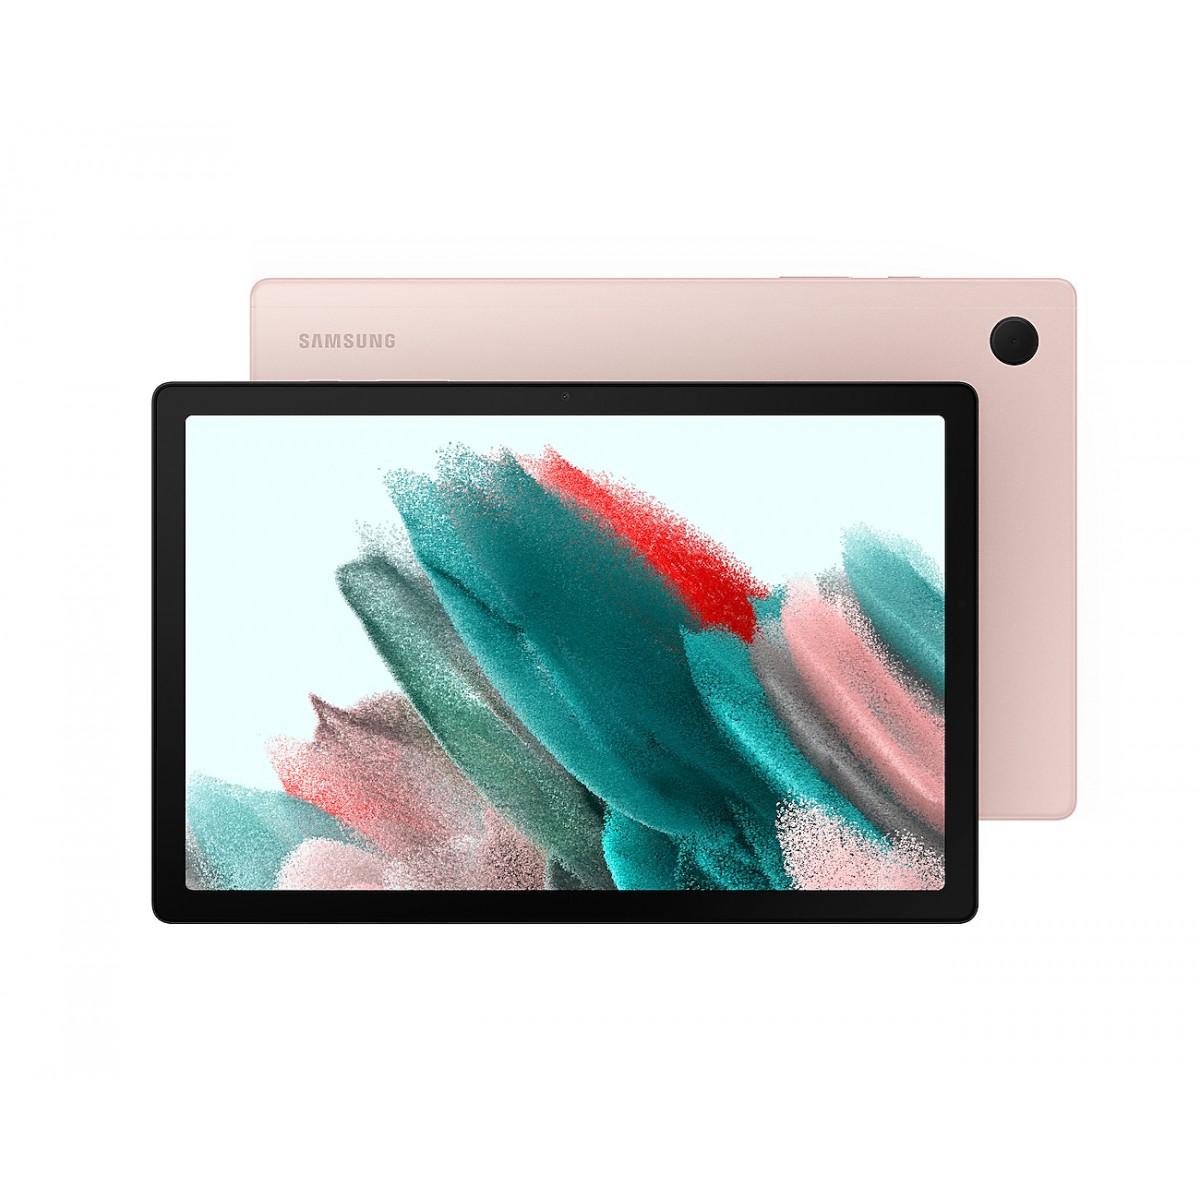 Samsung GALAXY TAB A 128 GB Gold, Pink - Tablet